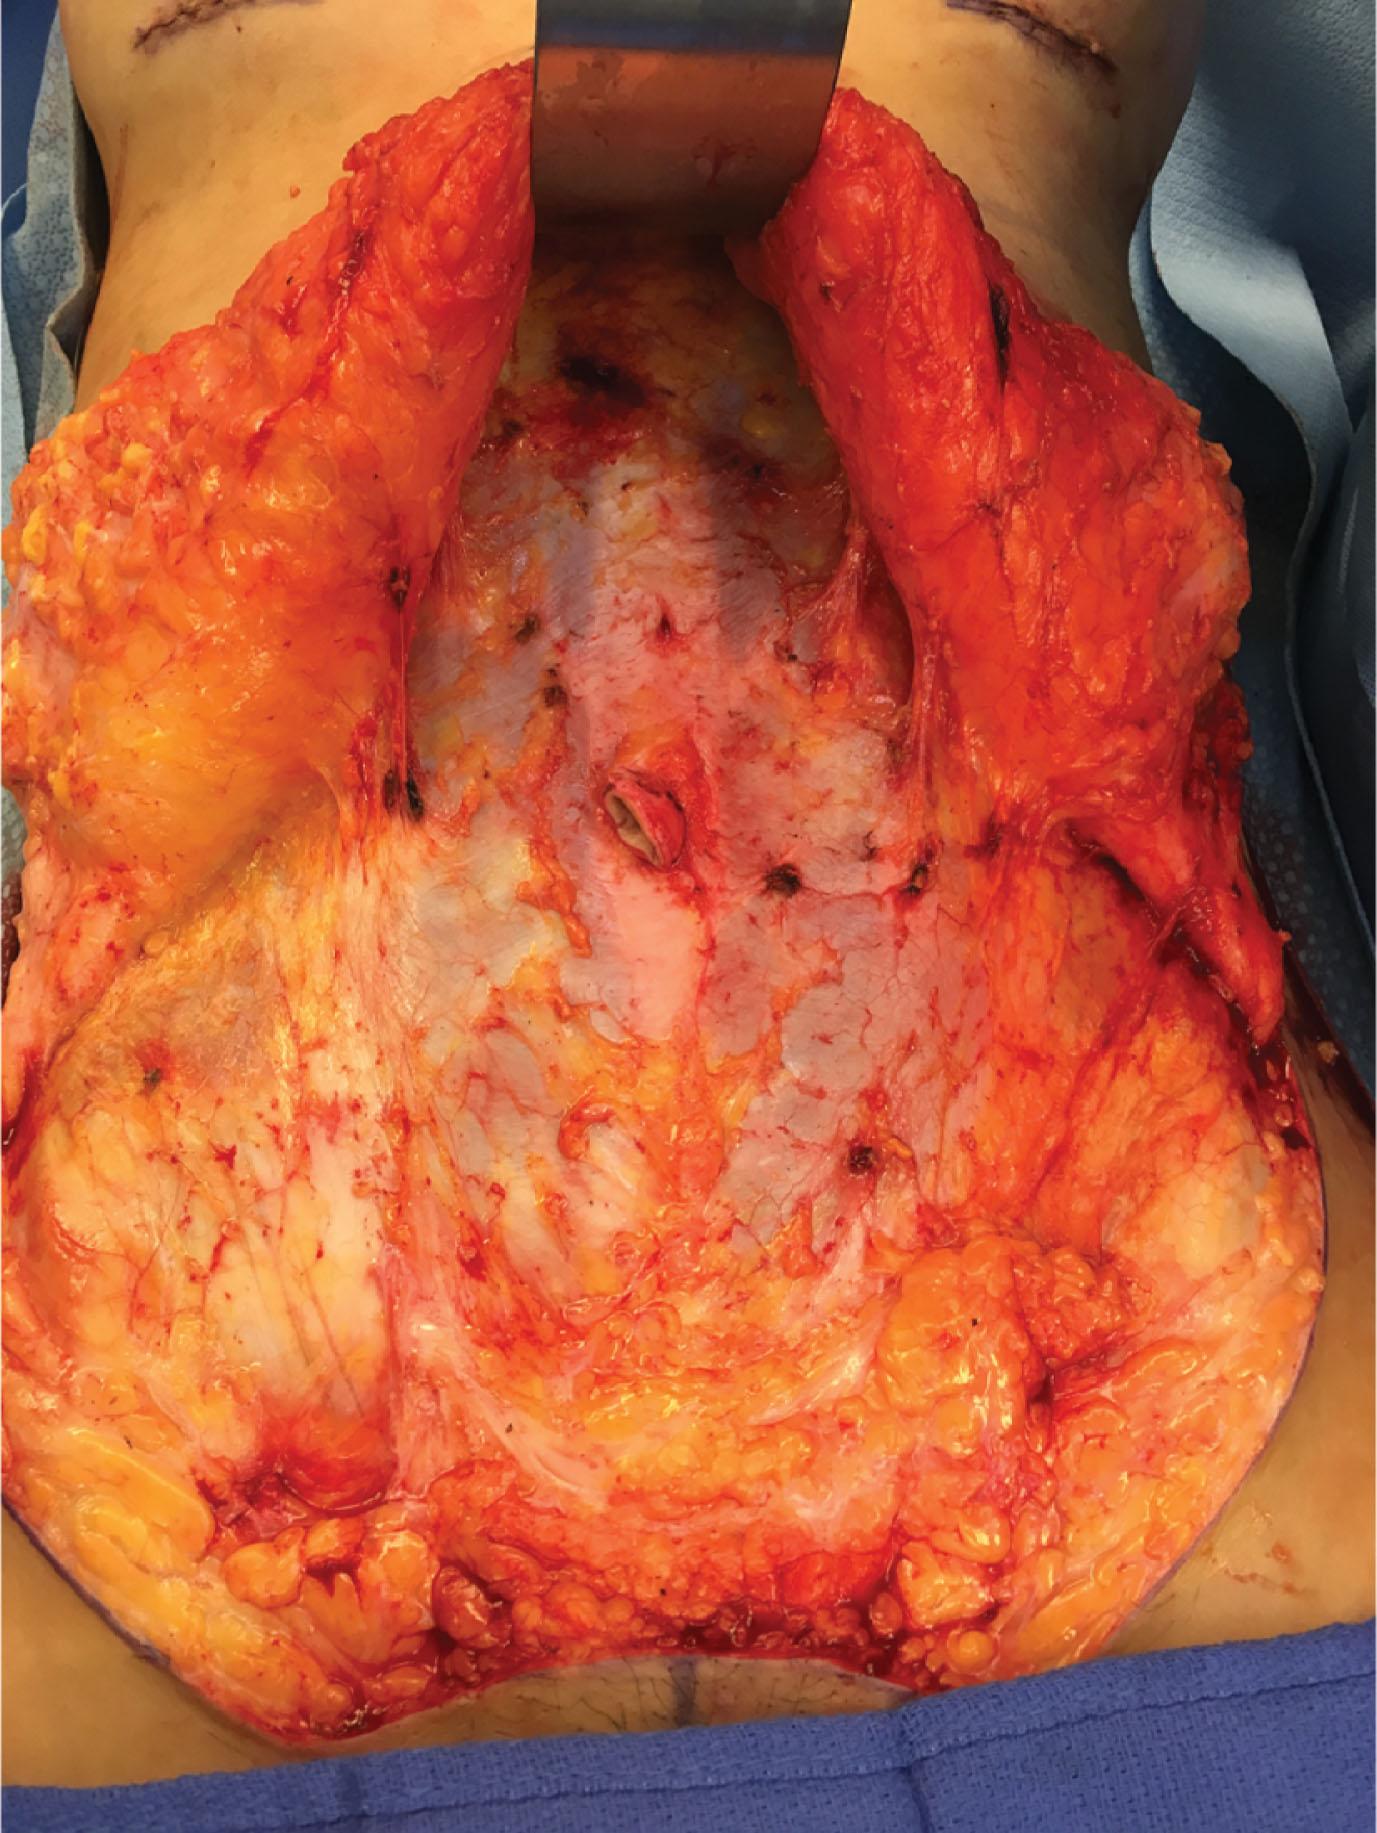 Figure 13.1, Linea alba seen both above and below umbilicus in a female undergoing an abdominoplasty for rectus diastasis.